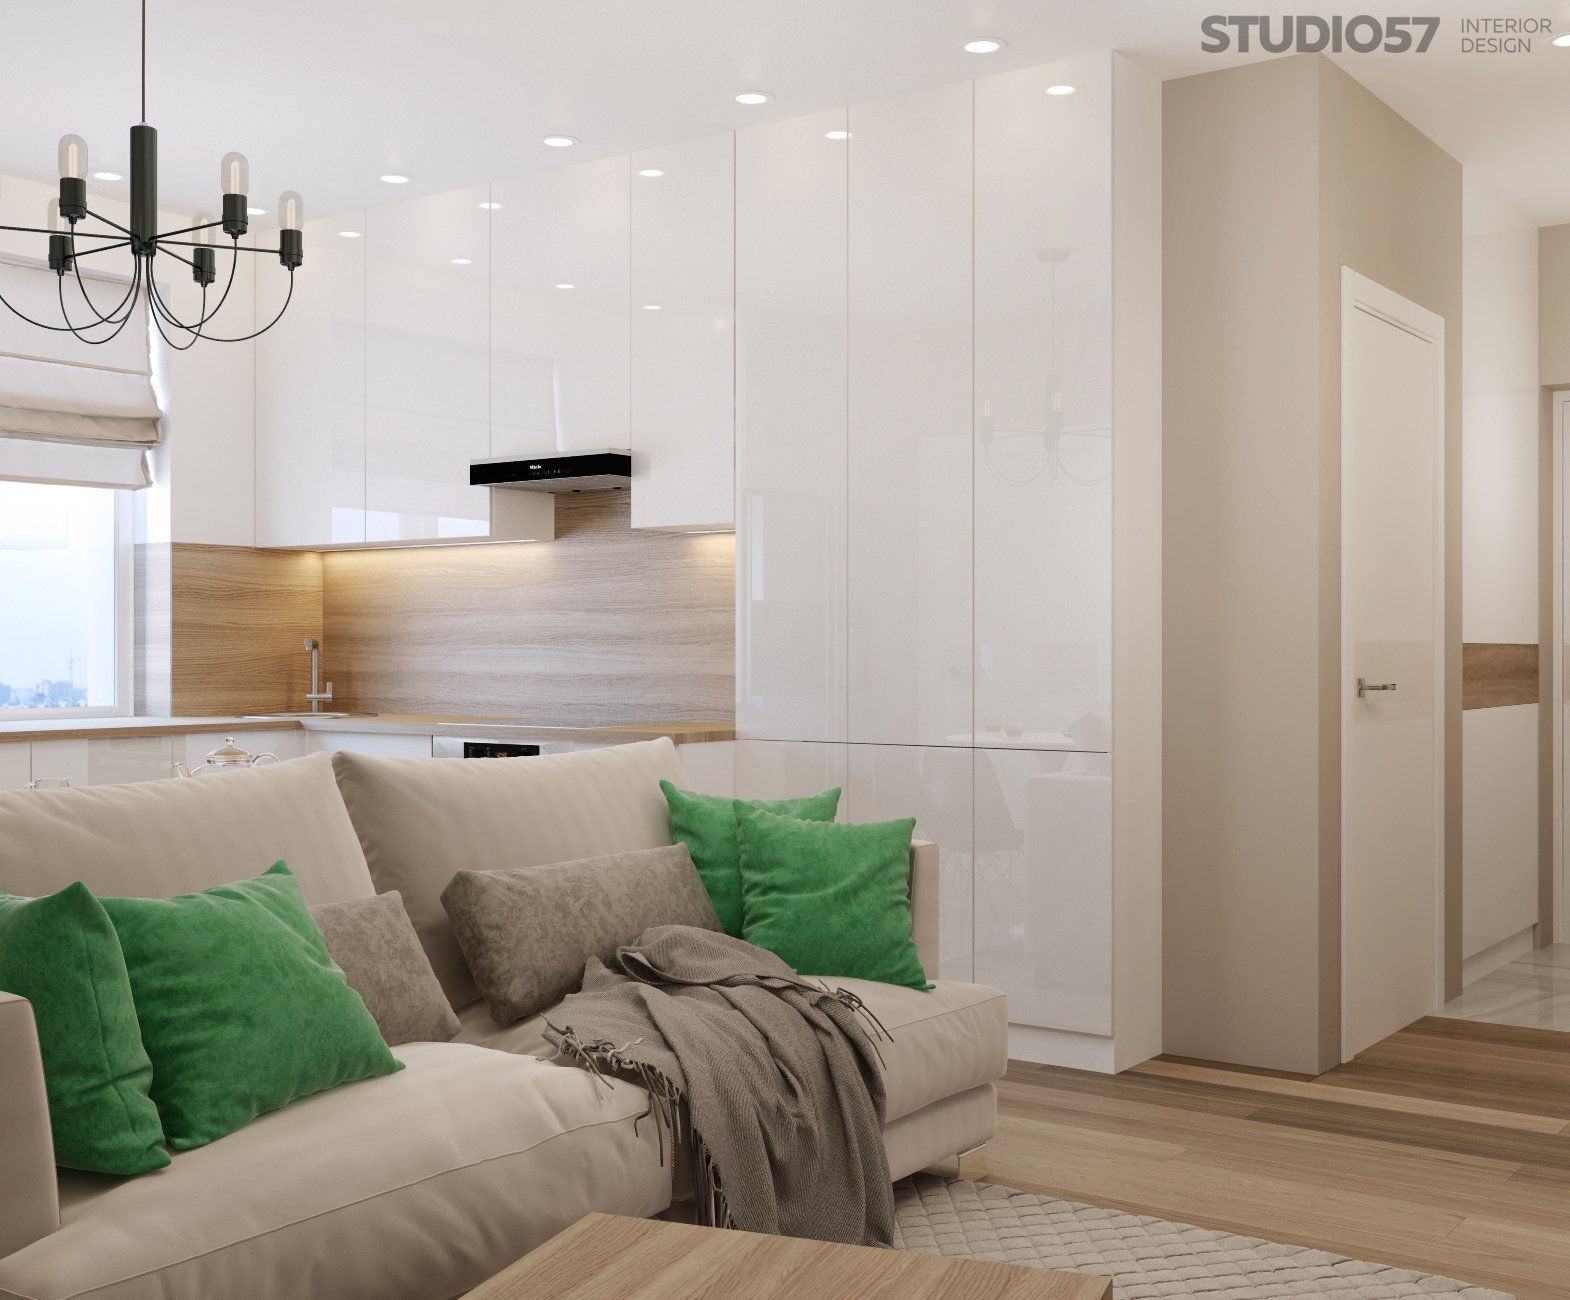 Interior design studio apartment in modern style photo